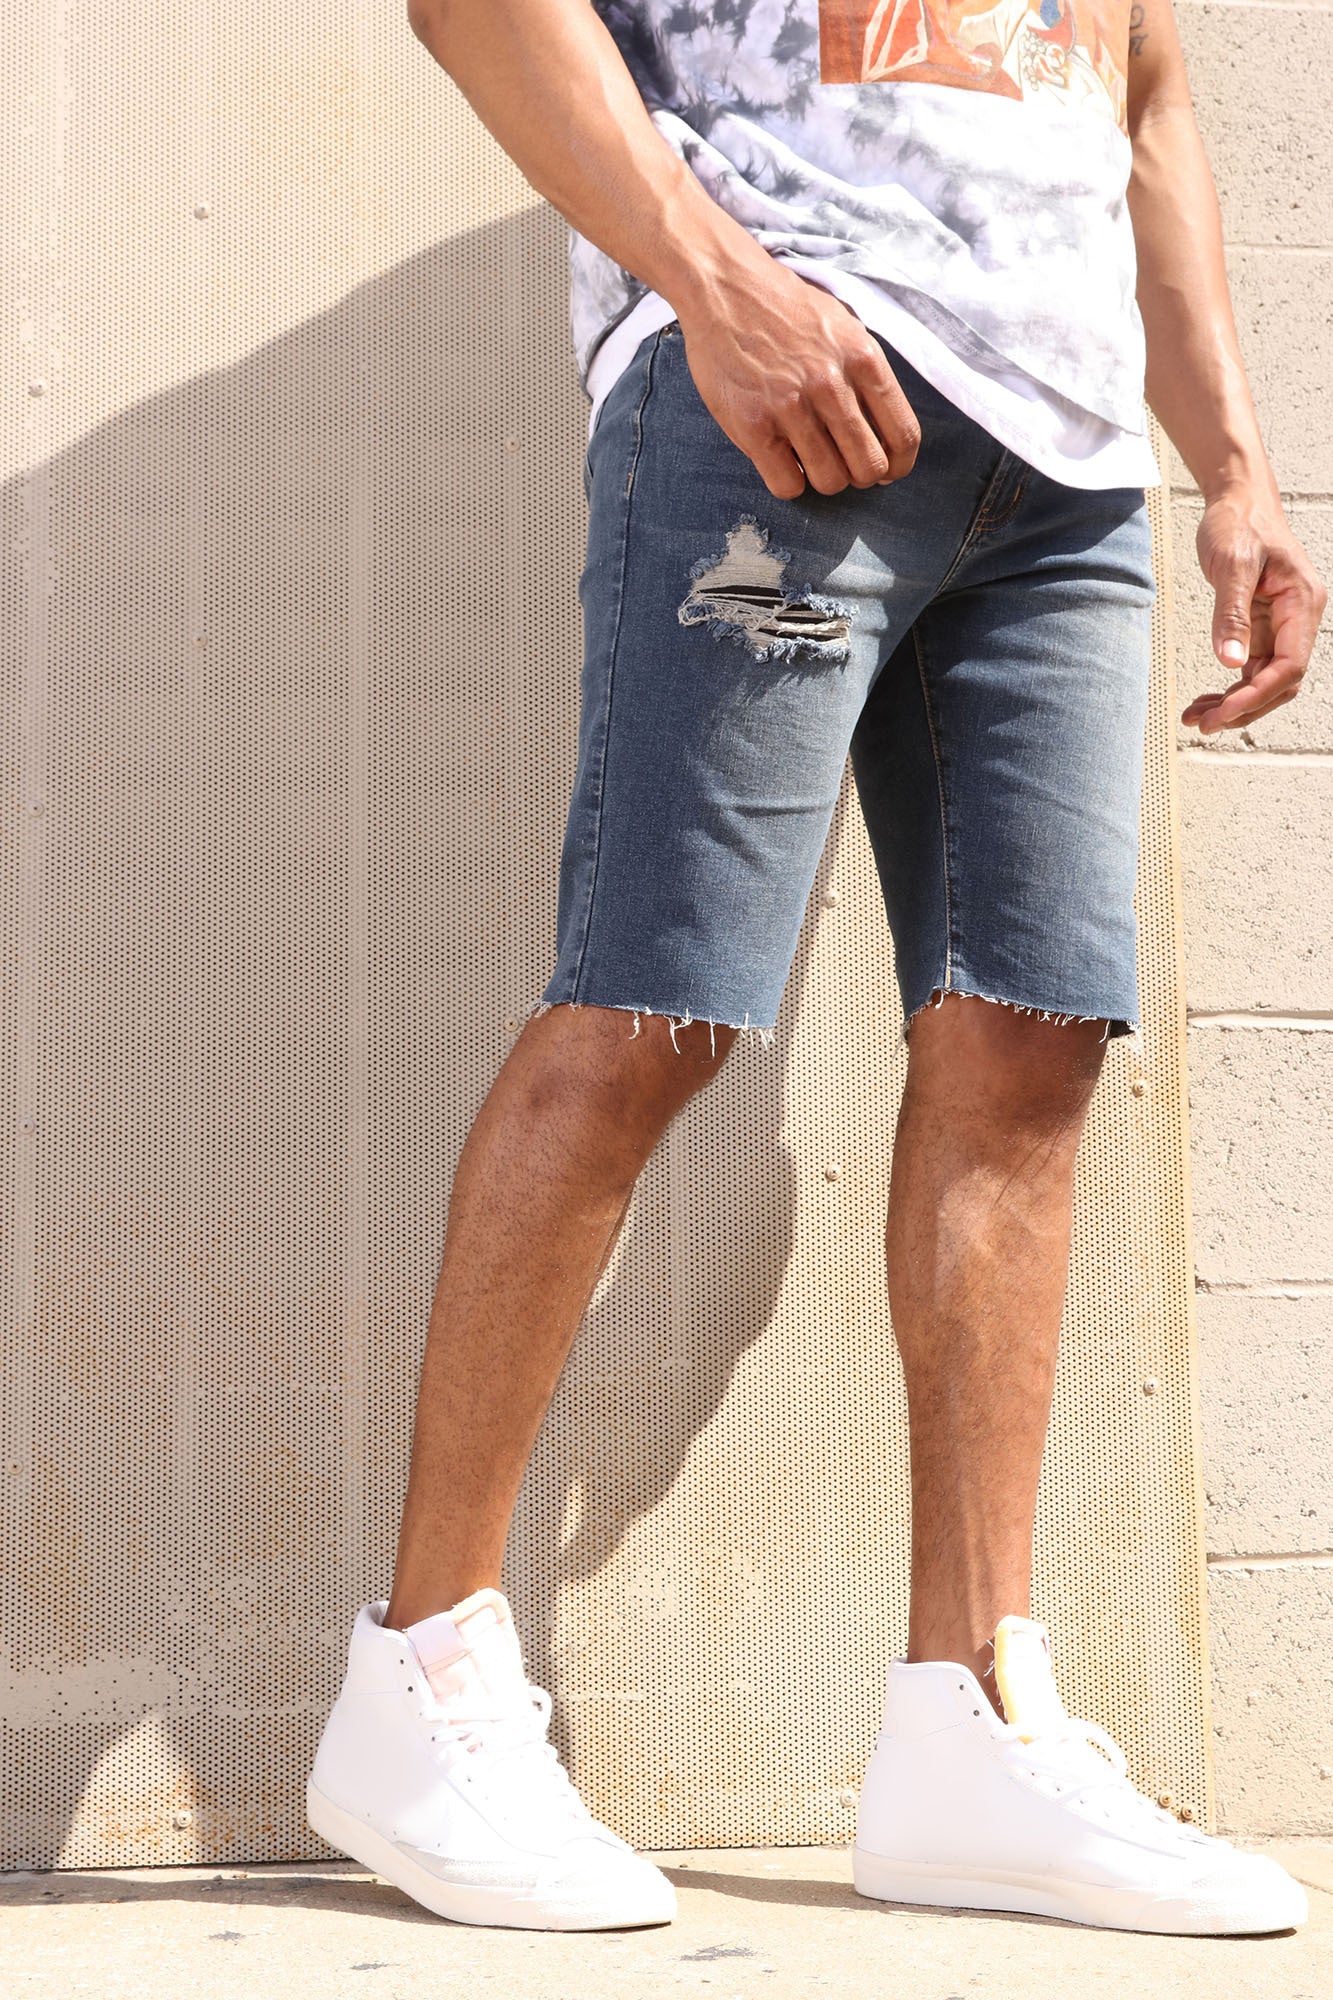 8 Men's Denim Shorts That Prove Jorts Can Be Fashionable